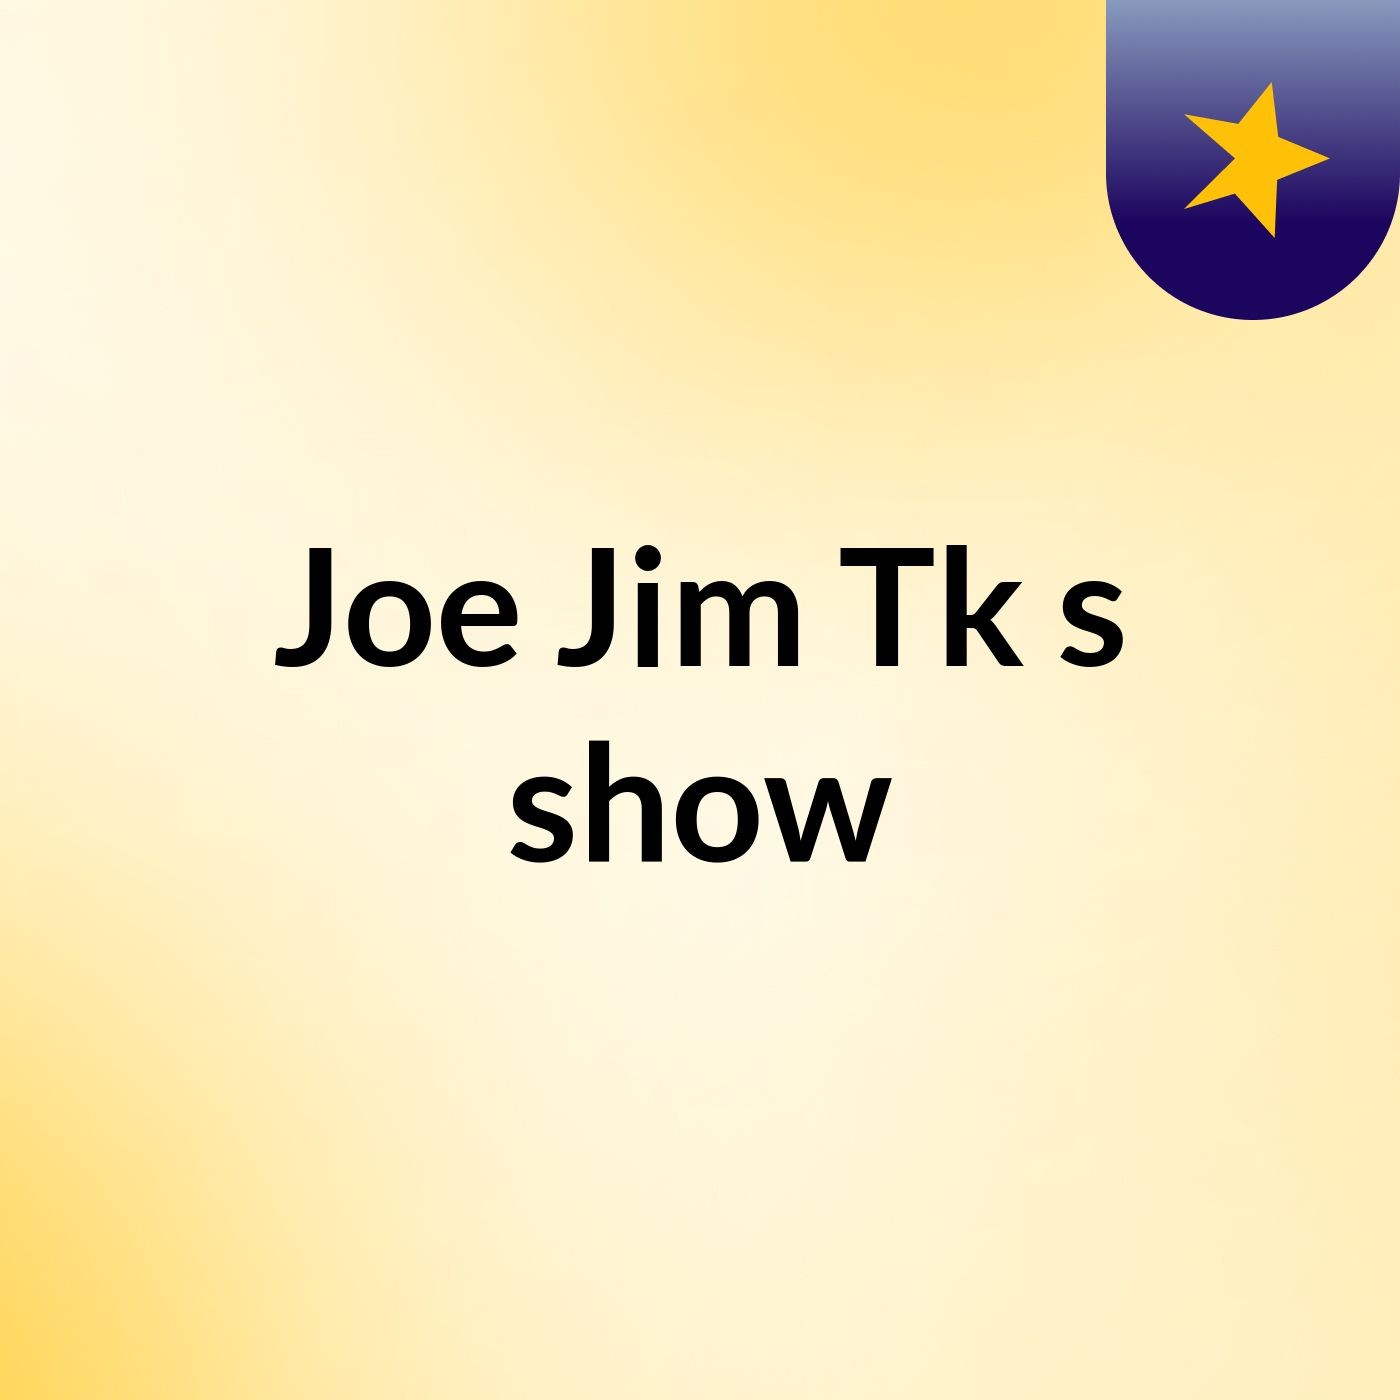 Joe Jim Tk's show